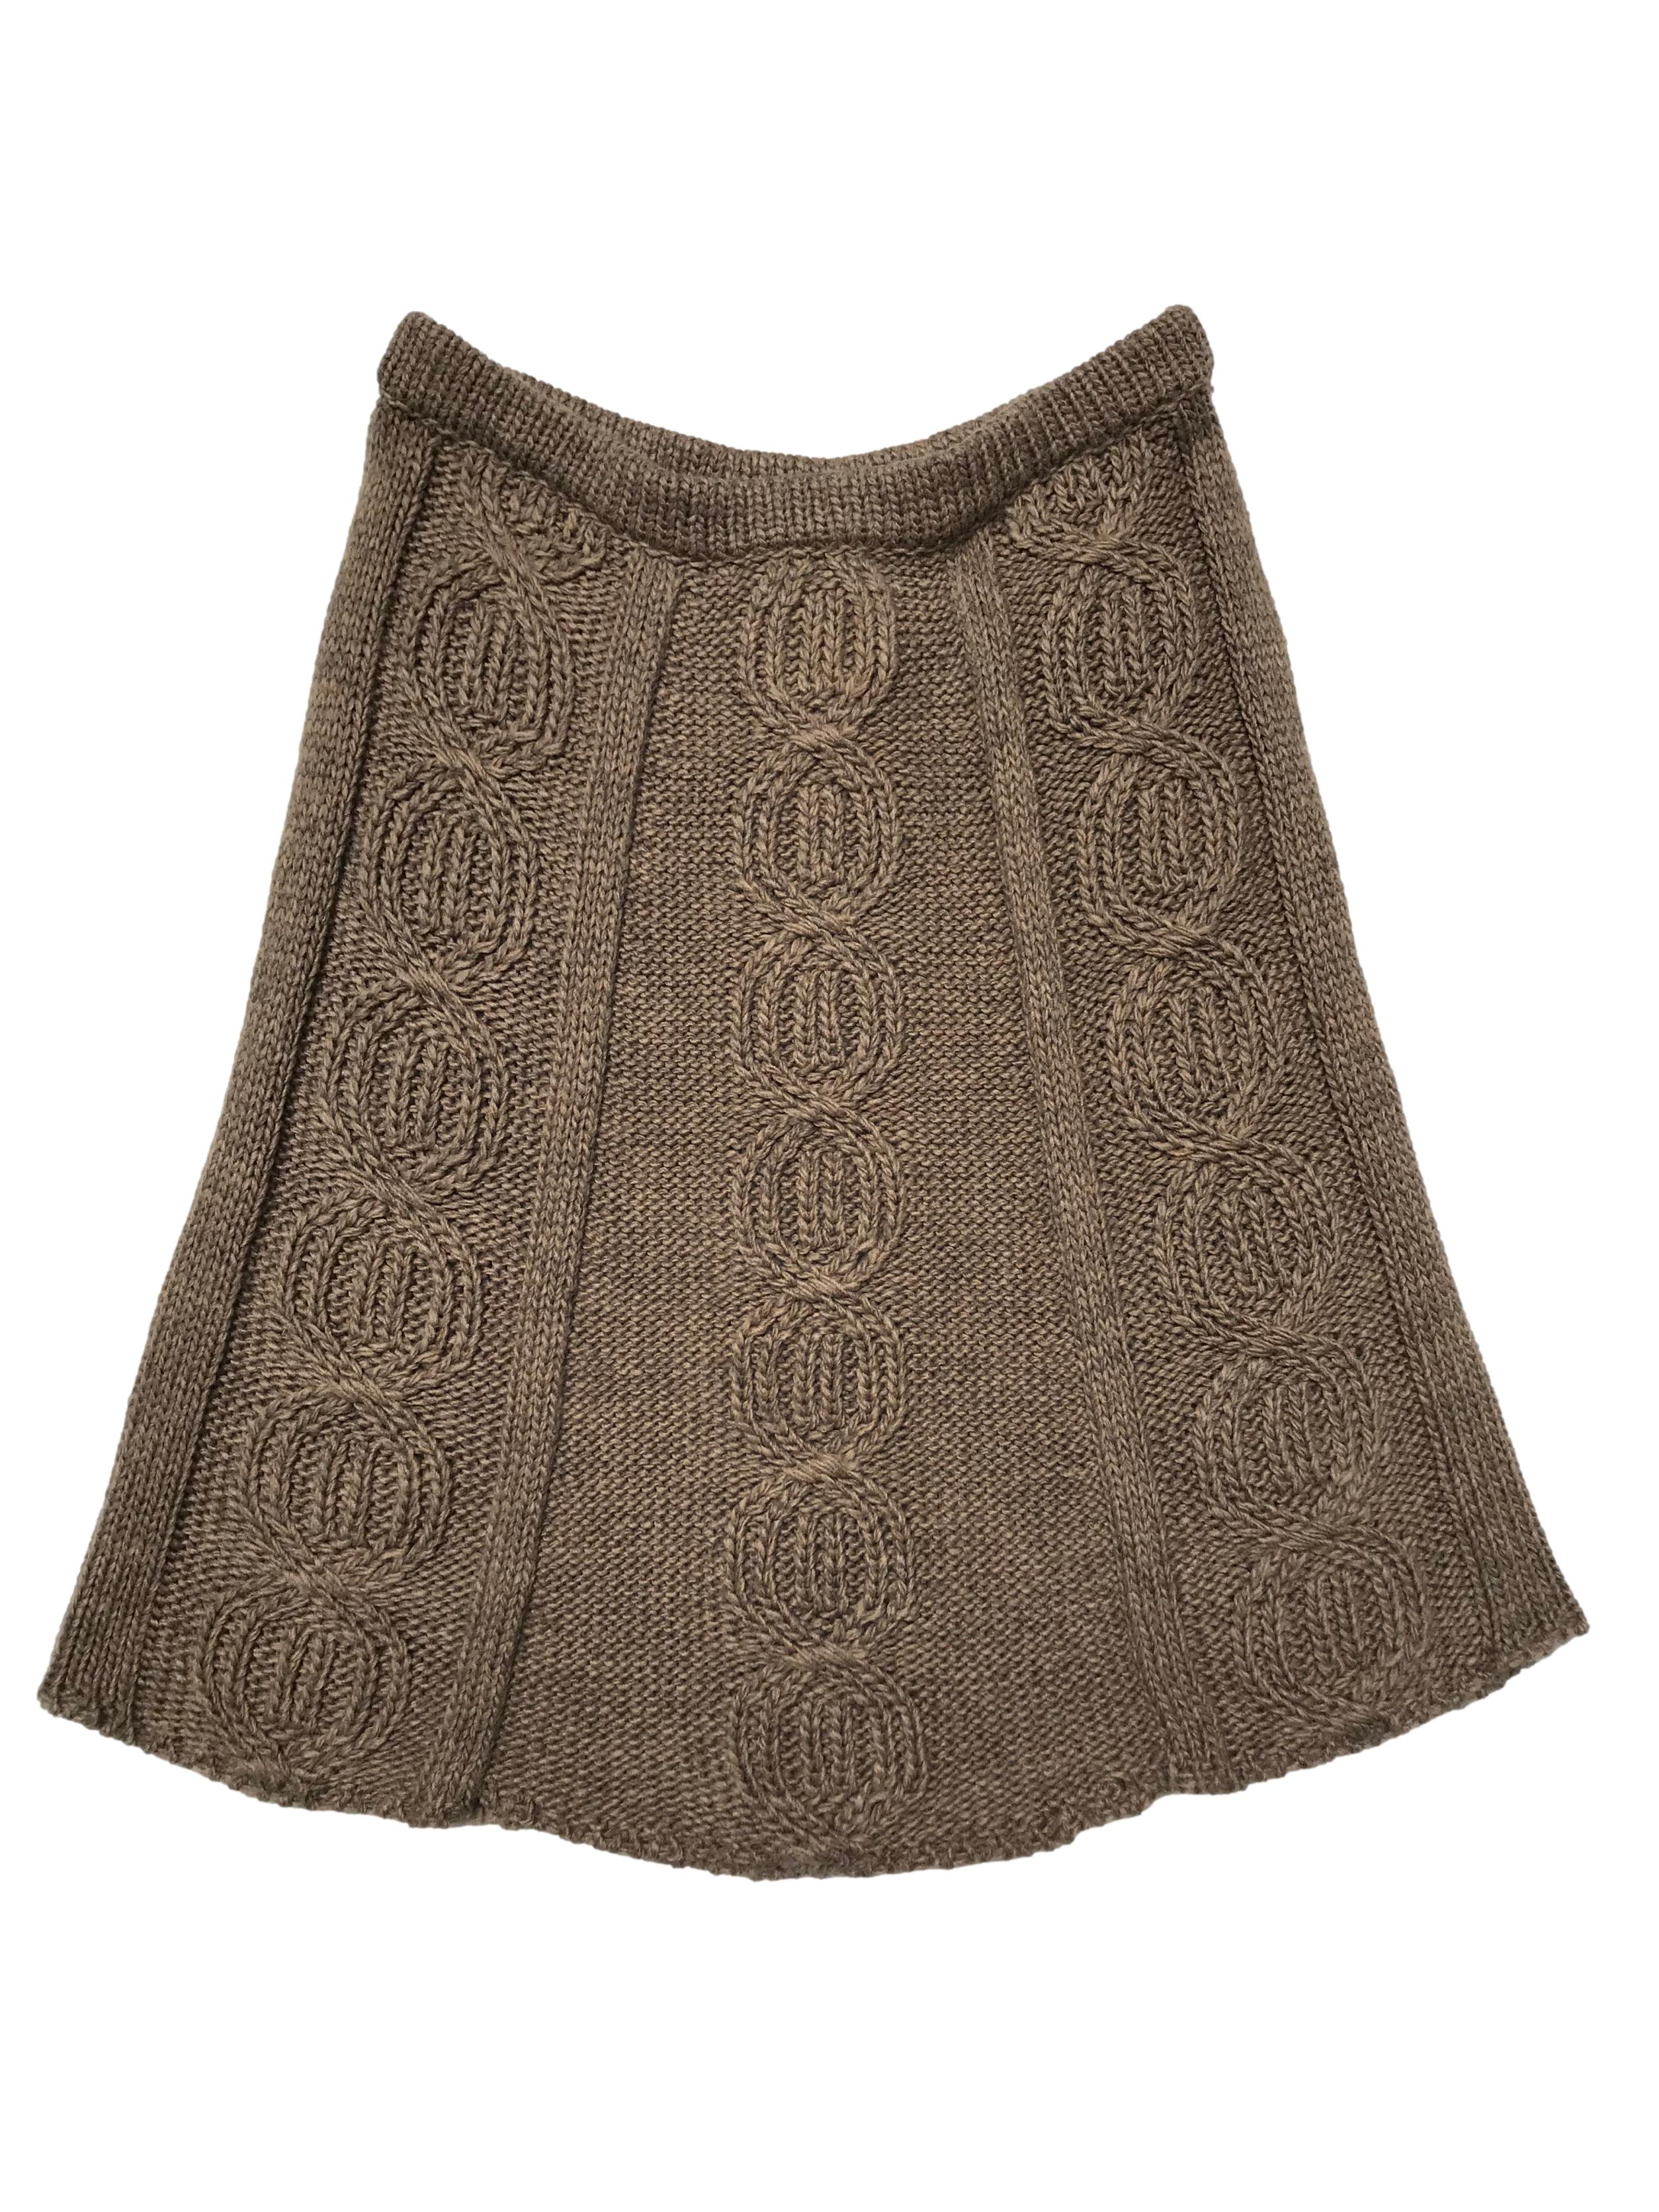 Falda Zara de tejido grueso marròn mezcla de lana. Cintura 82cm Largo 65cm